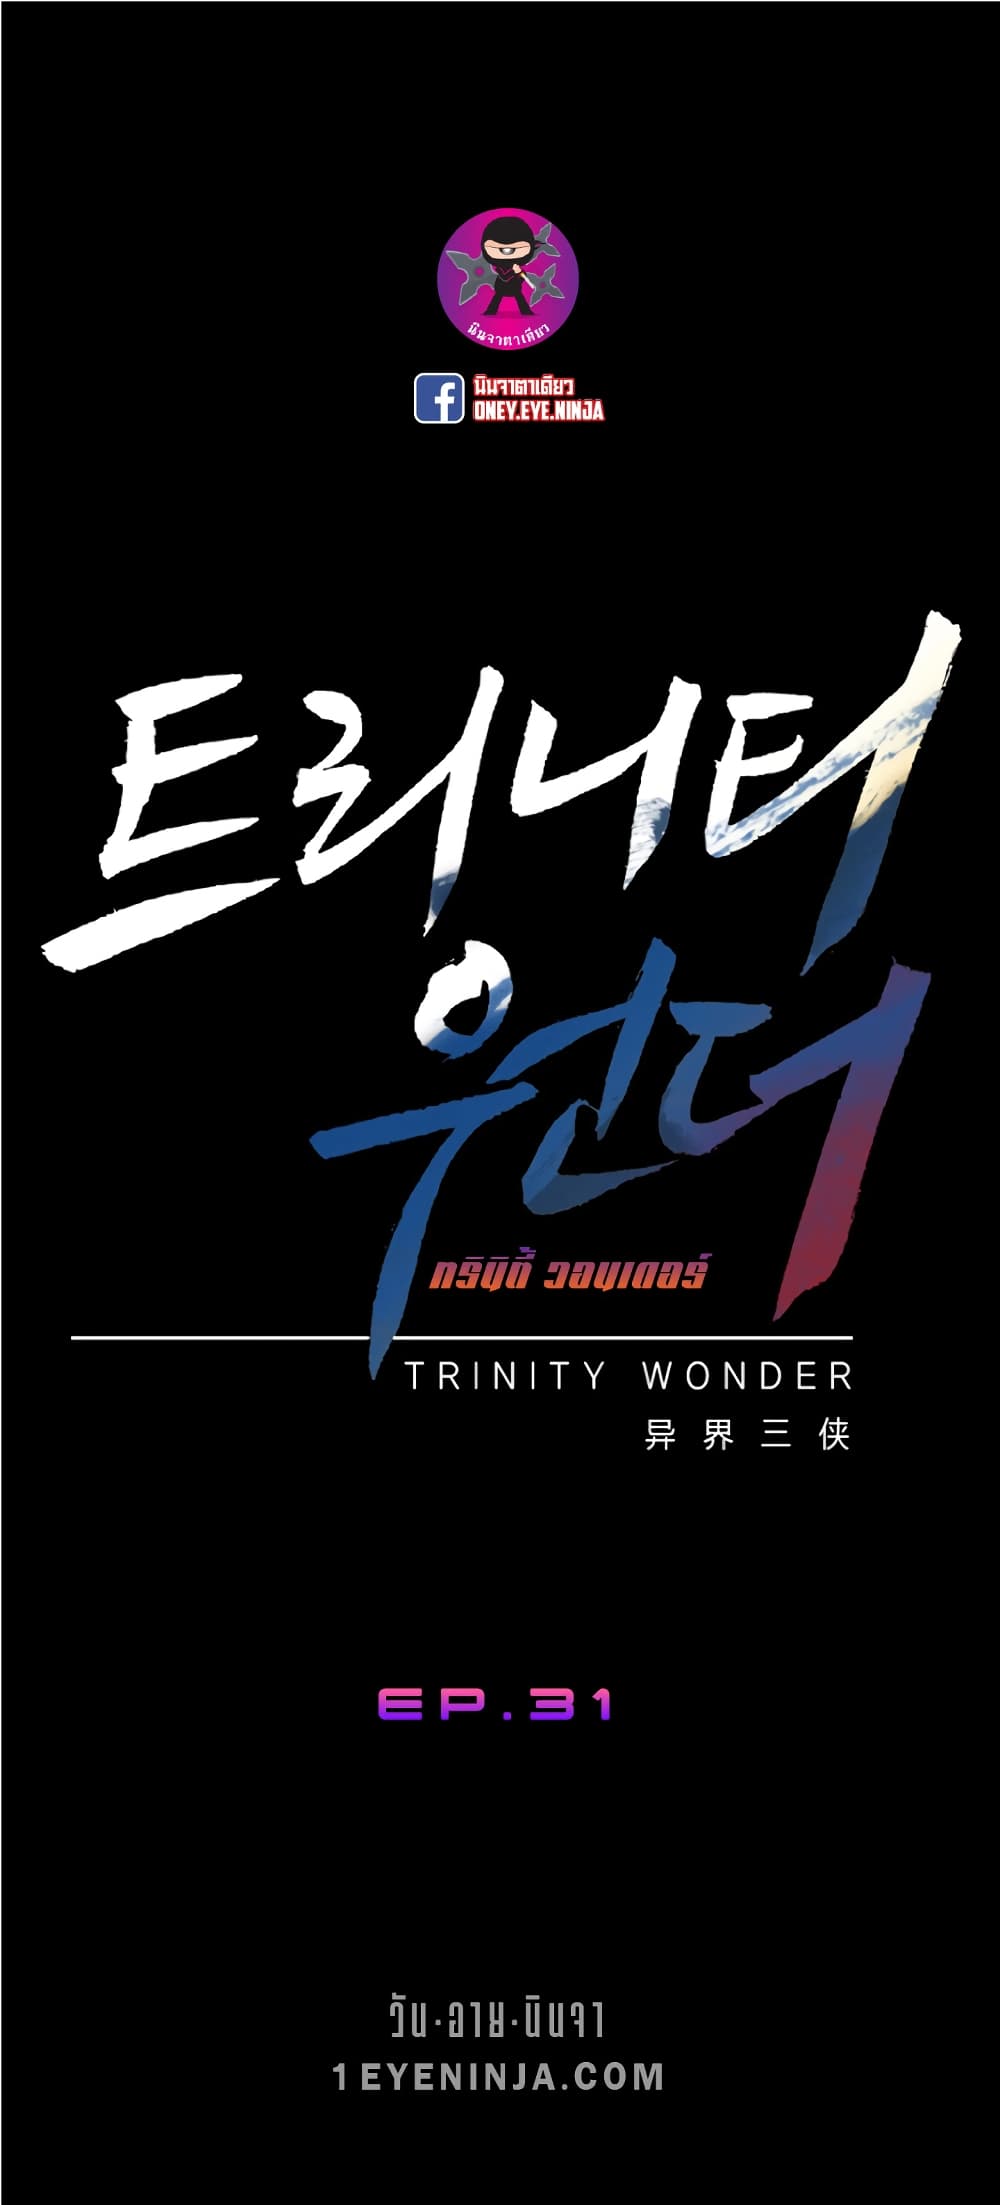 Trinity Wonder 31 (2)